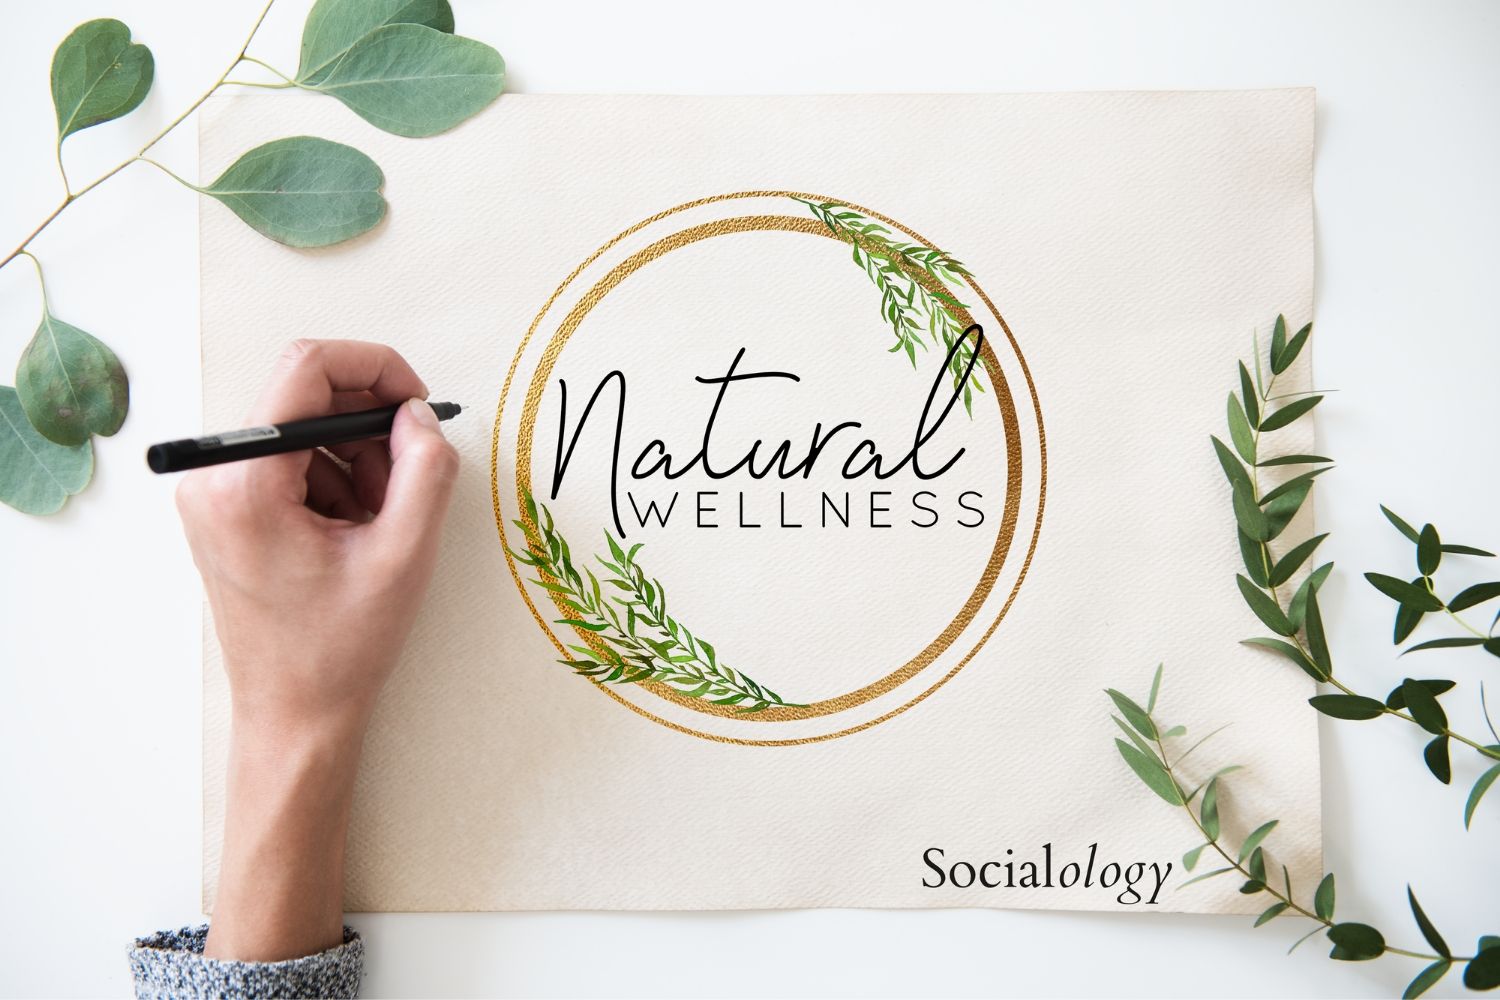 natural wellness company logo design and branding marketing online